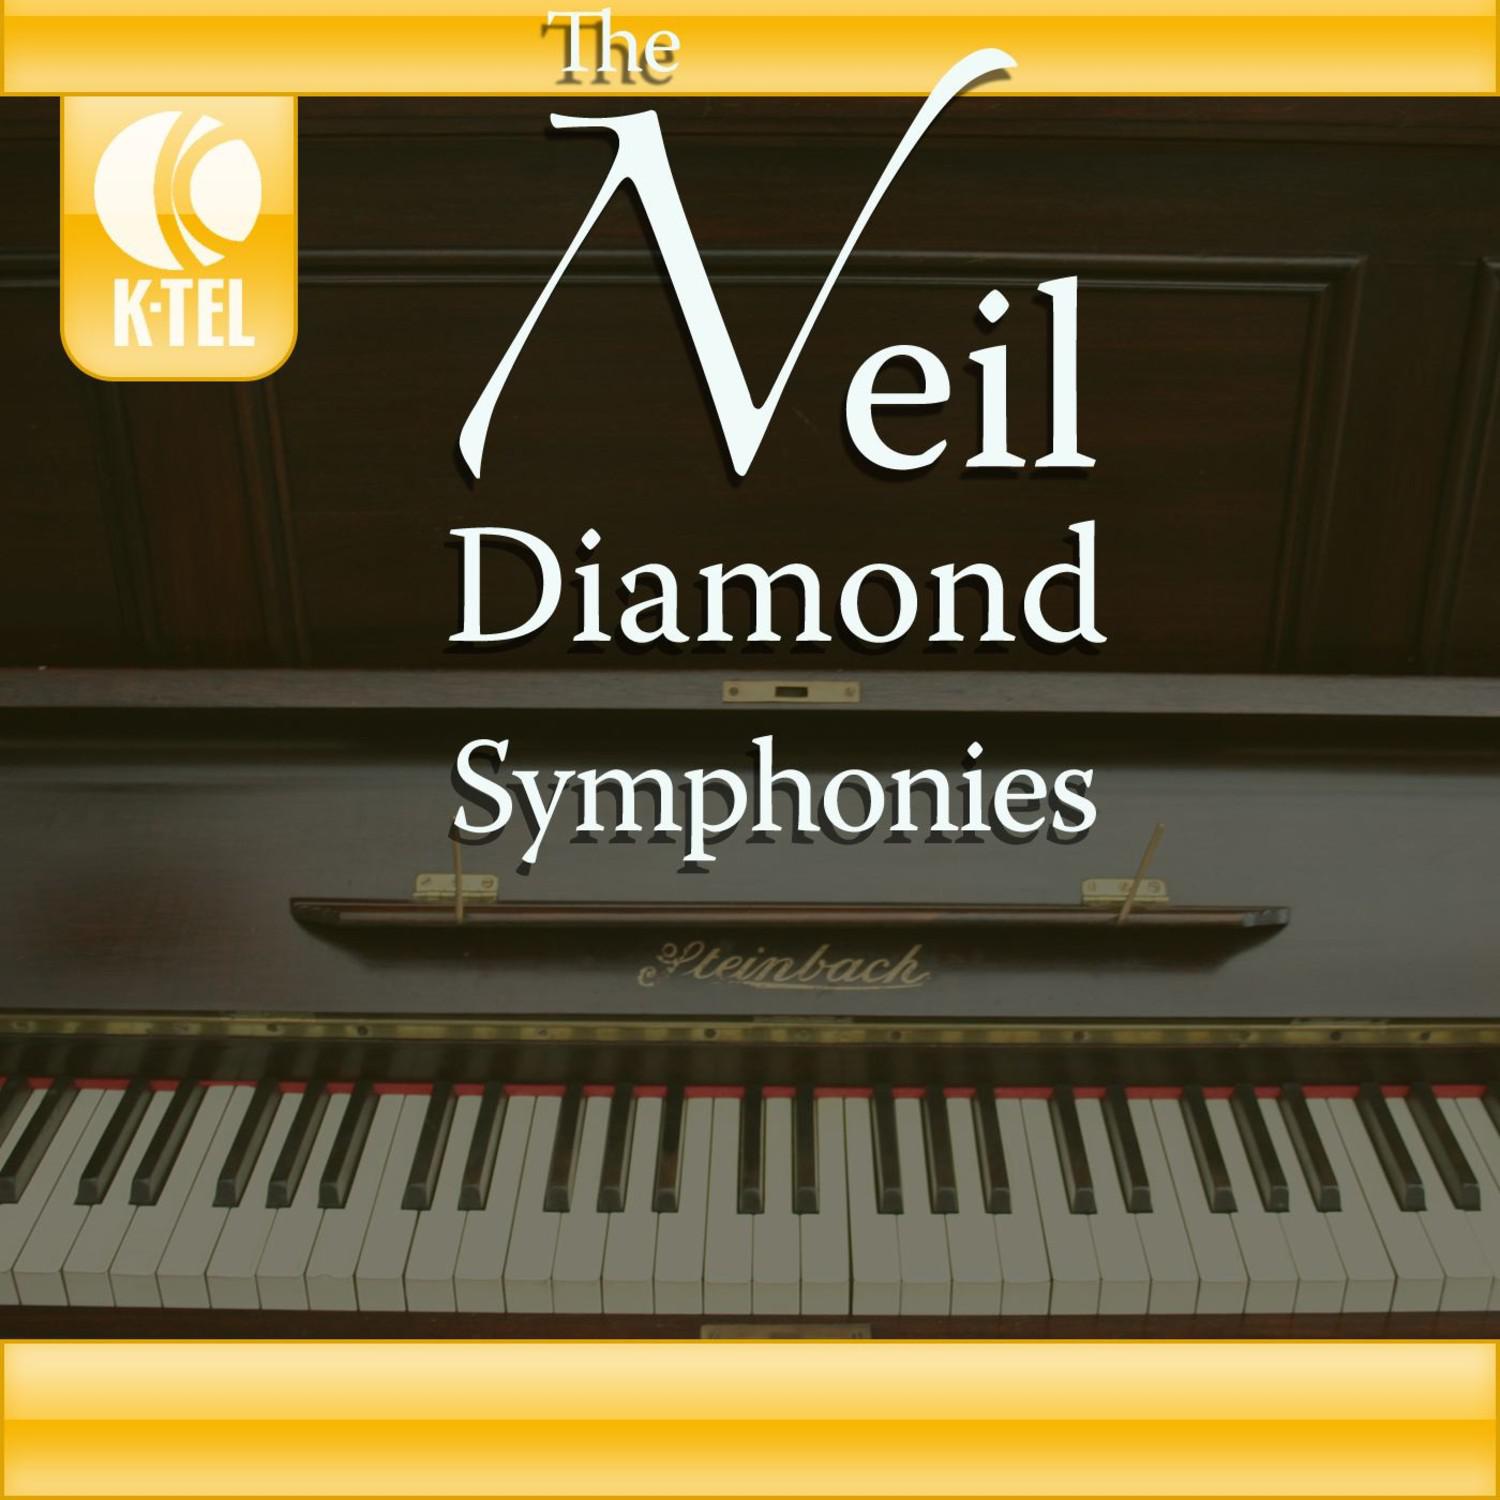 The Neil Diamond Symphonies